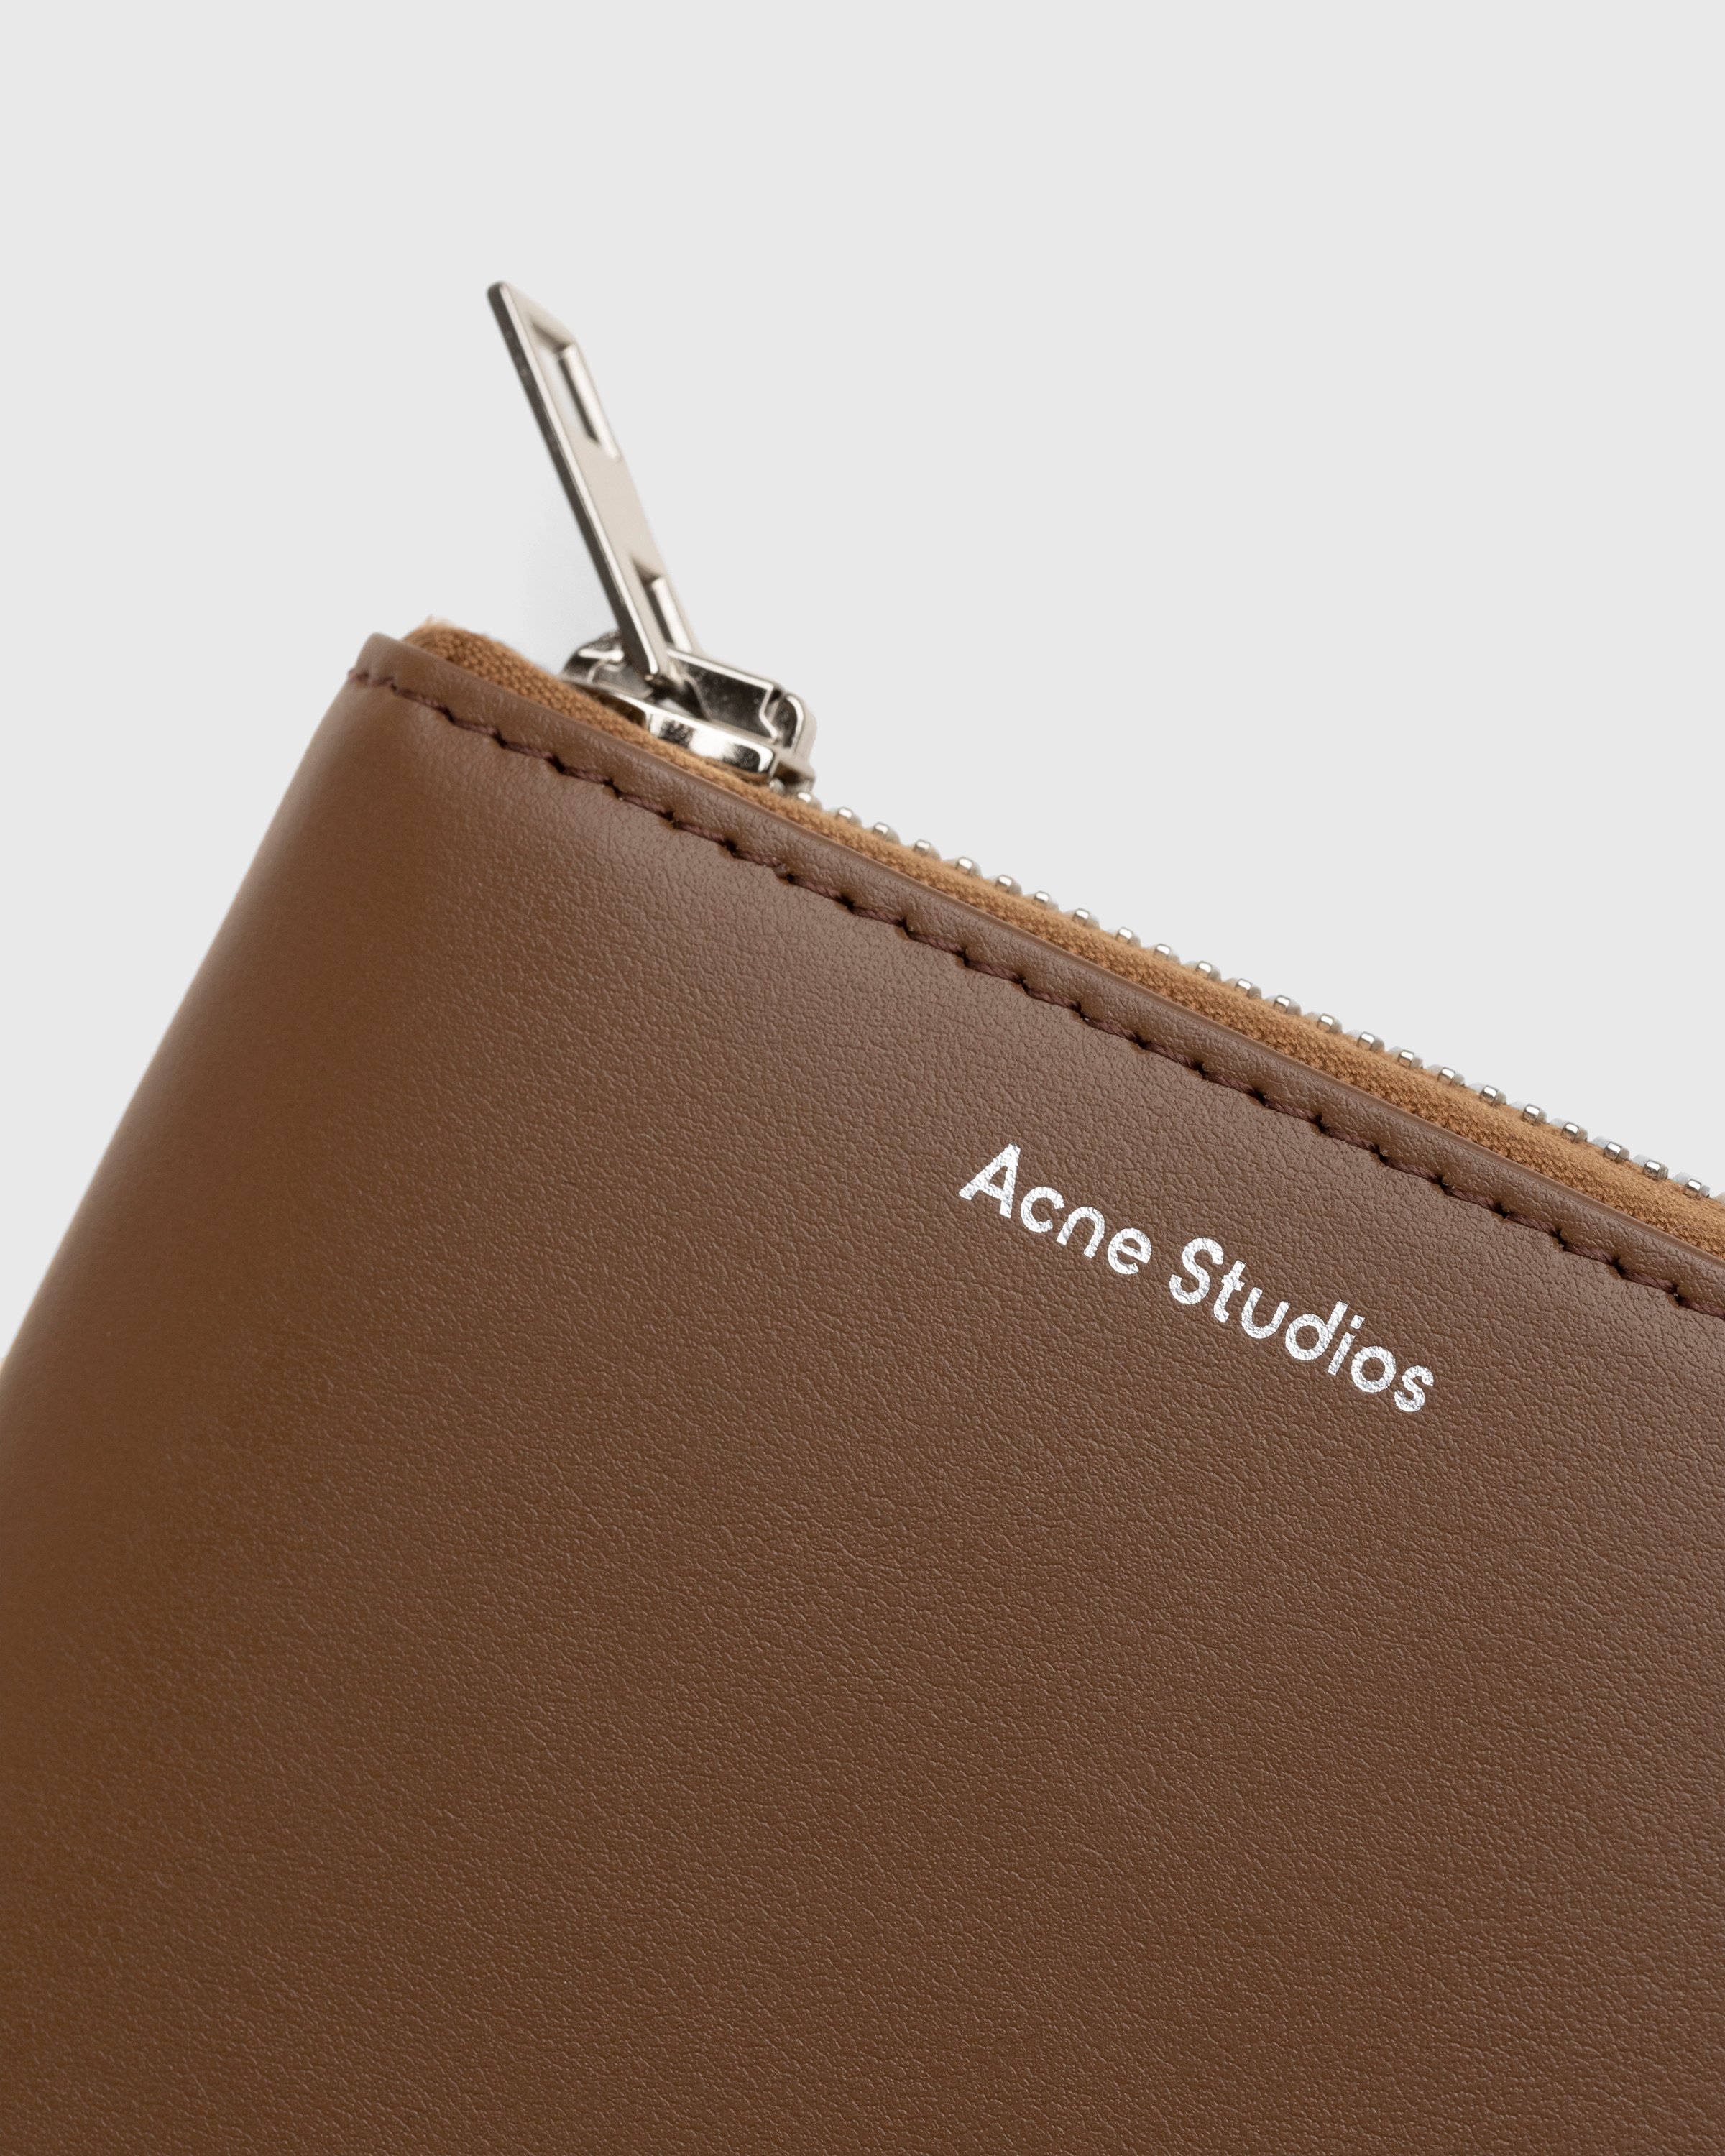 Acne Studios - Leather Zip Wallet Brown - Accessories - Brown - Image 3